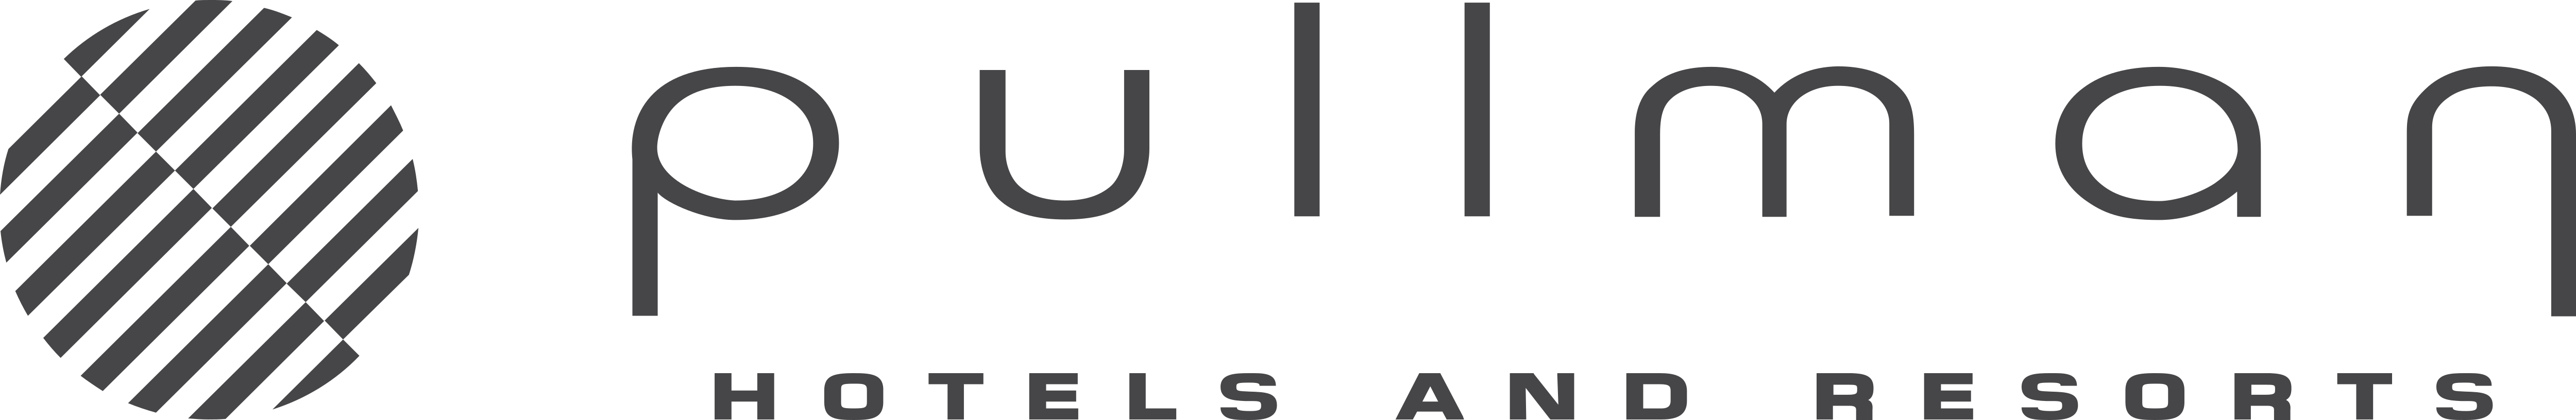 Pullman_Hotels_and_Resorts_Logo